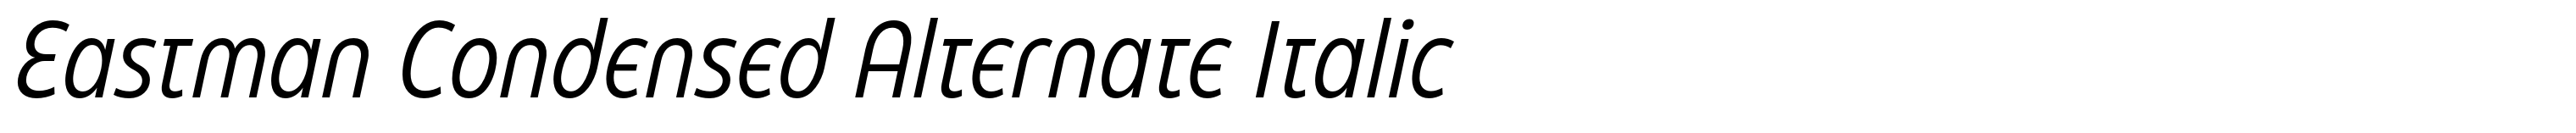 Eastman Condensed Alternate Italic